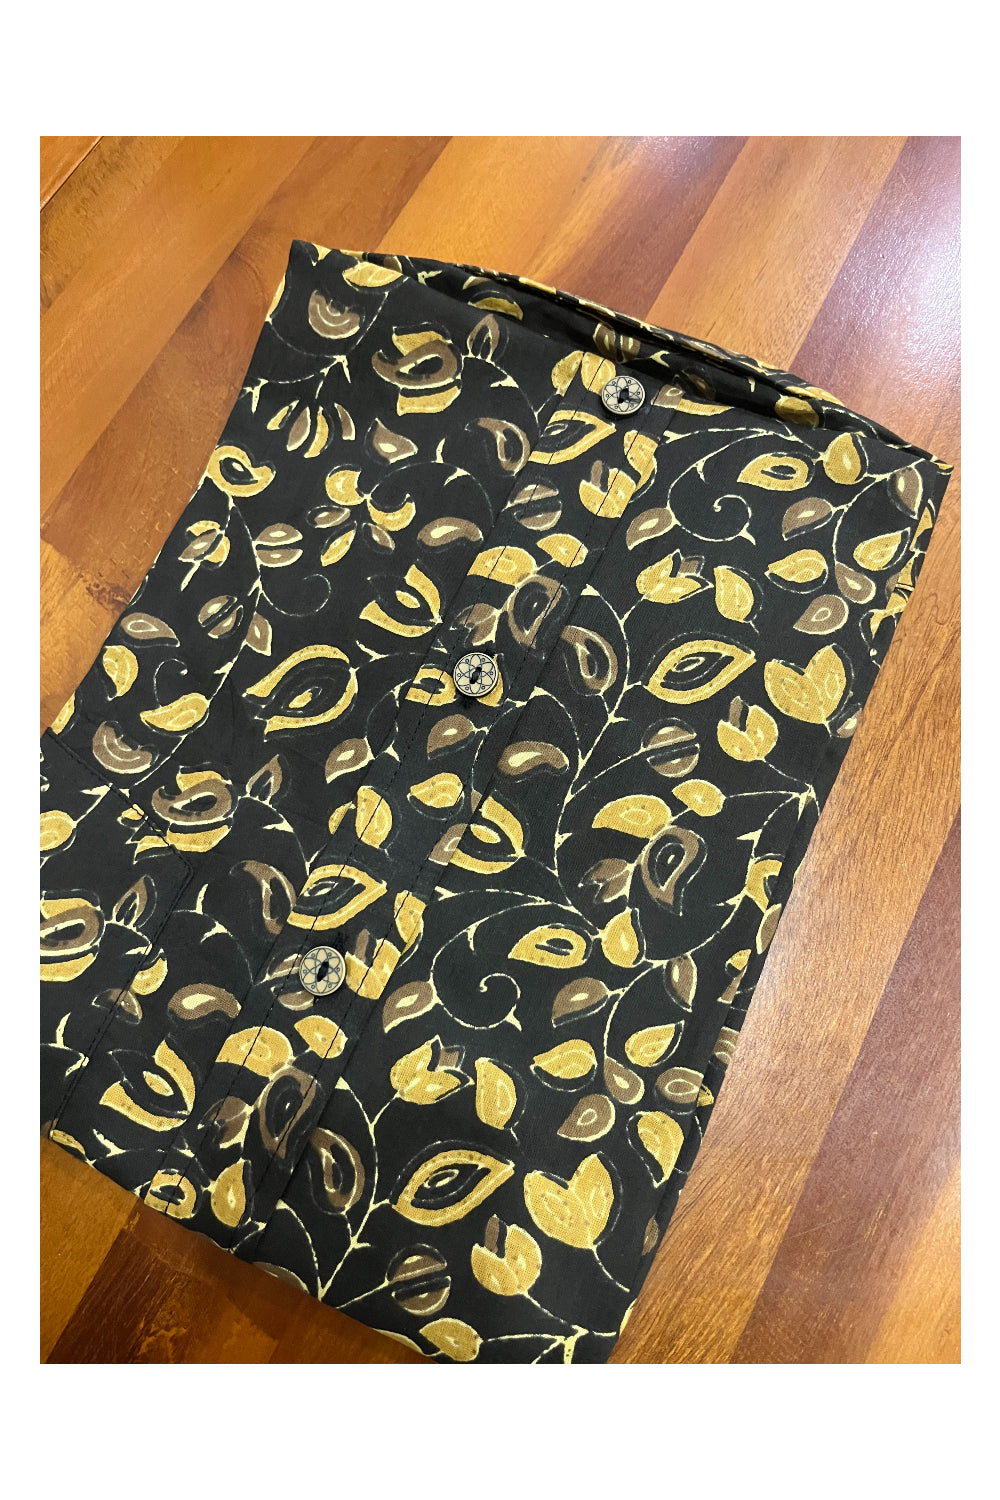 Southloom Jaipur Cotton Black Yellow Hand Block Printed Shirt (Half Sleeves)